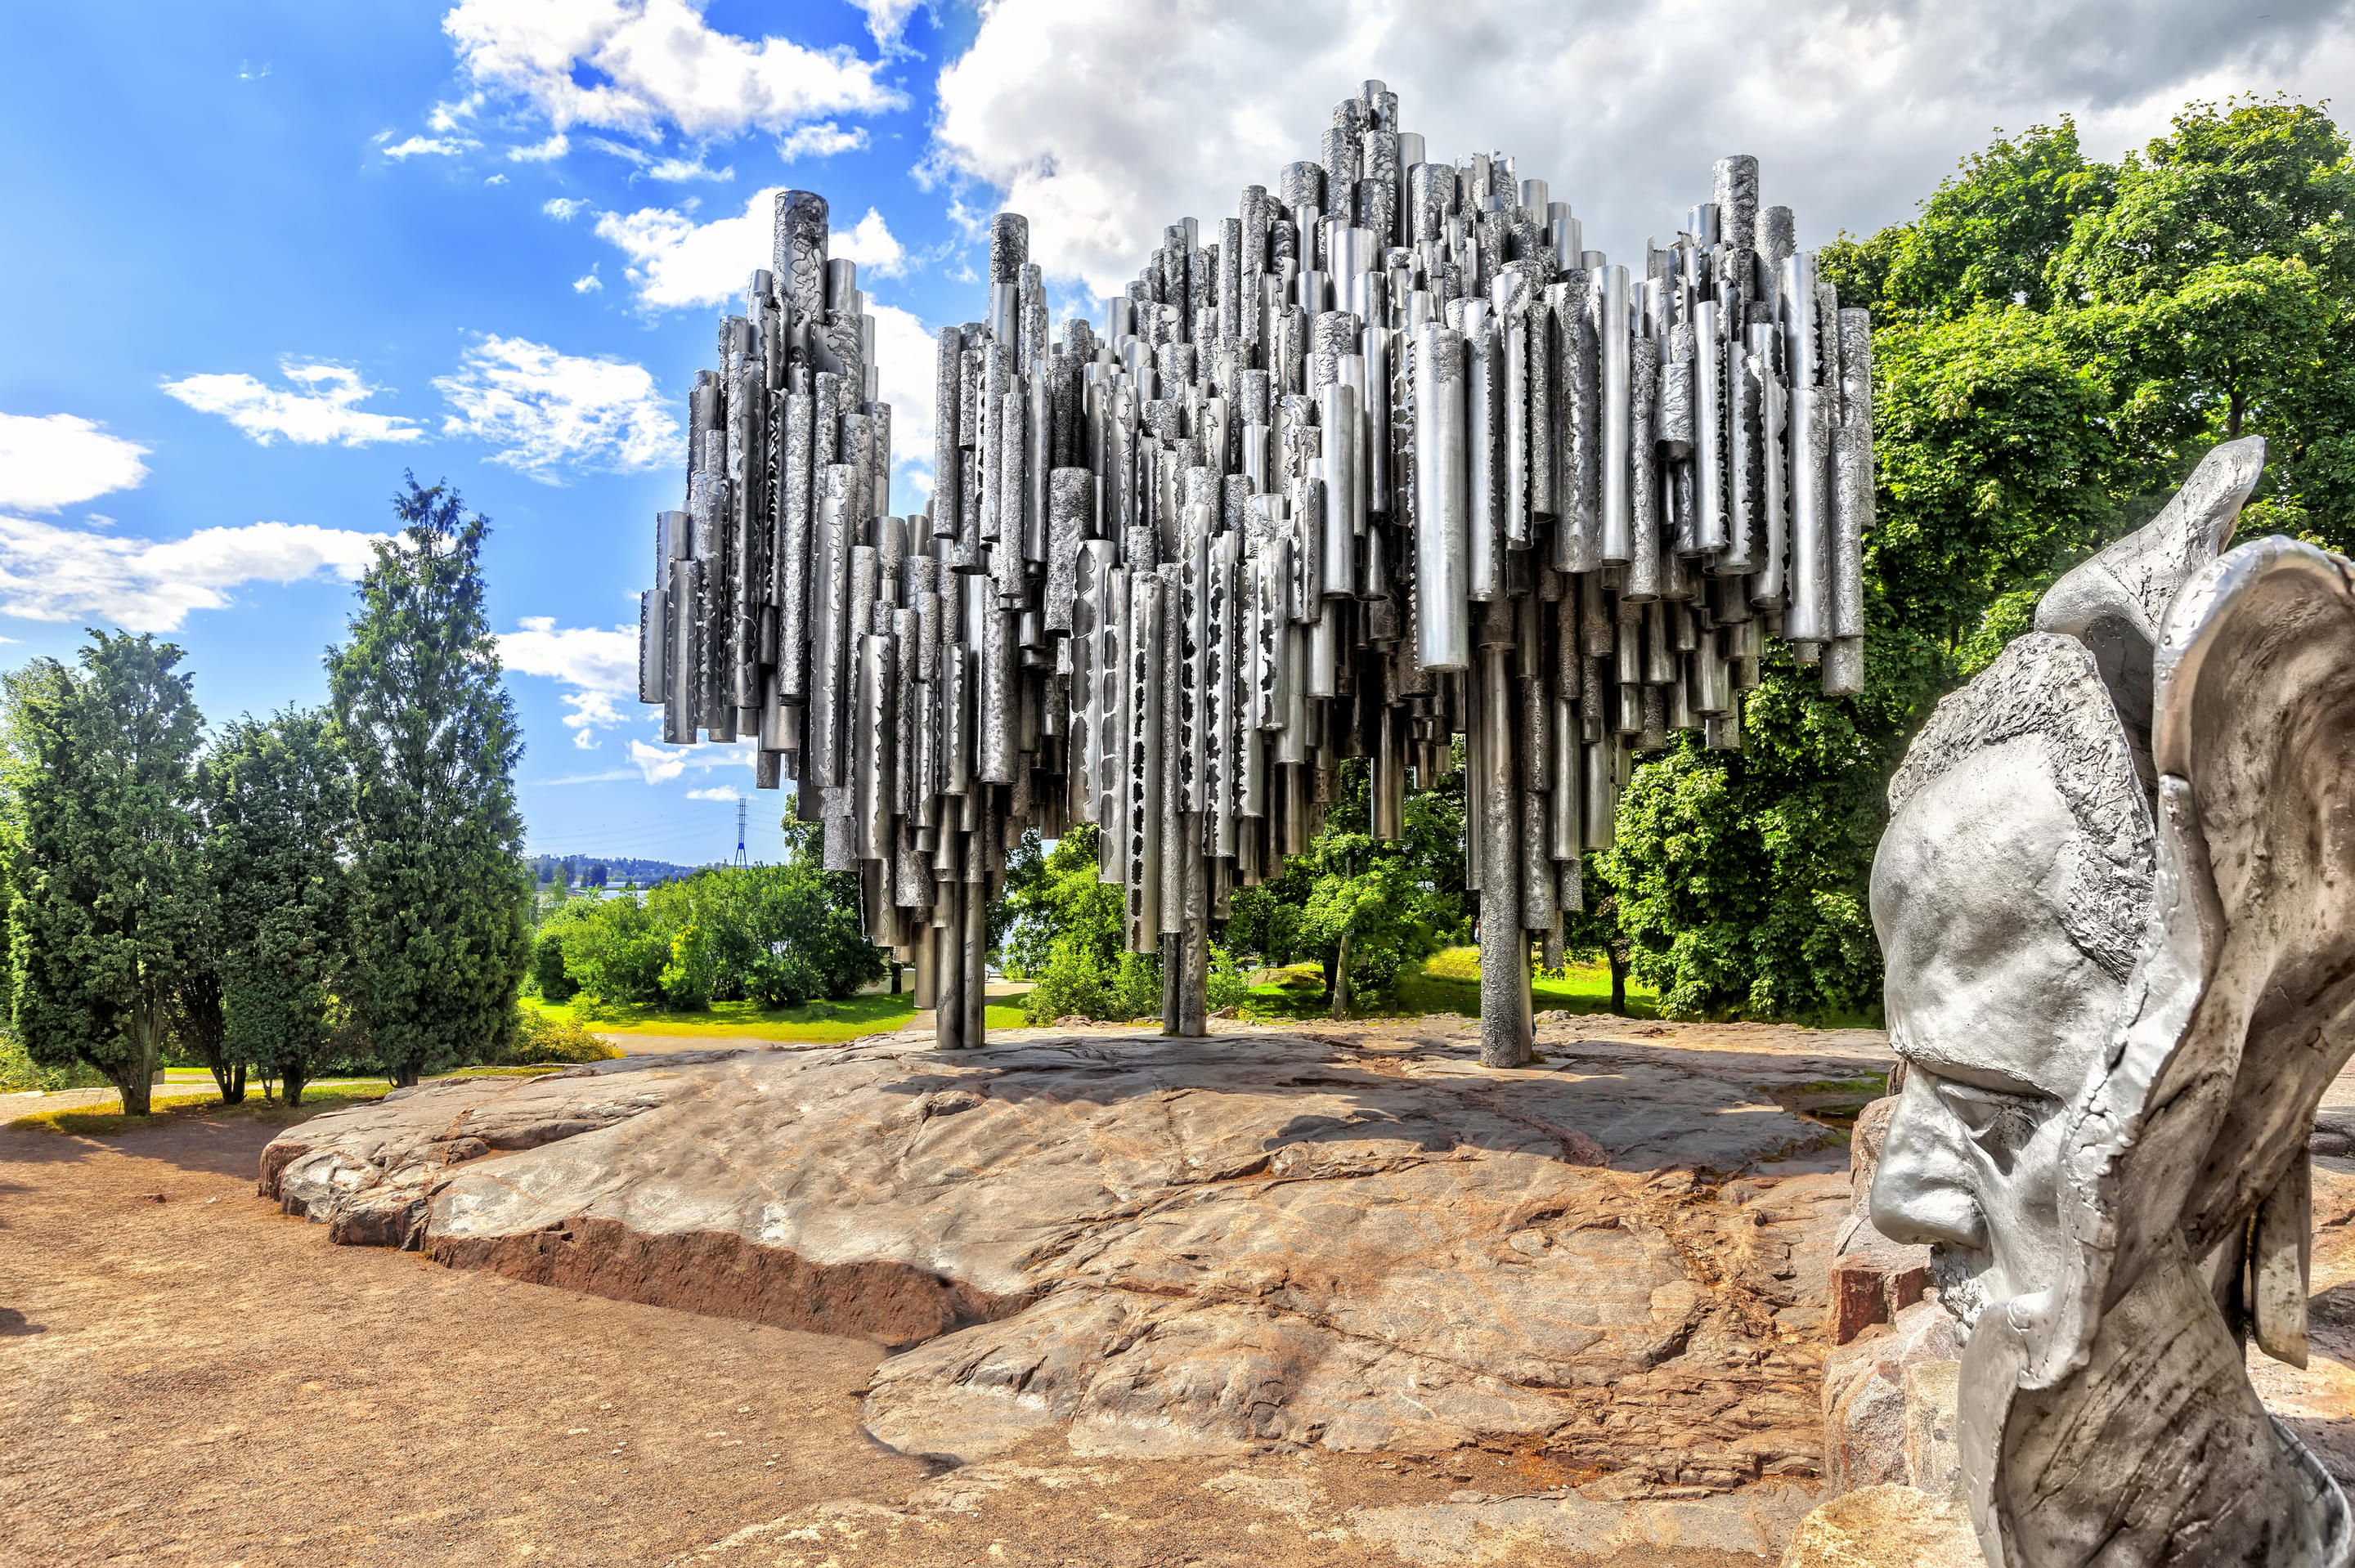 Sibelius Park Overview